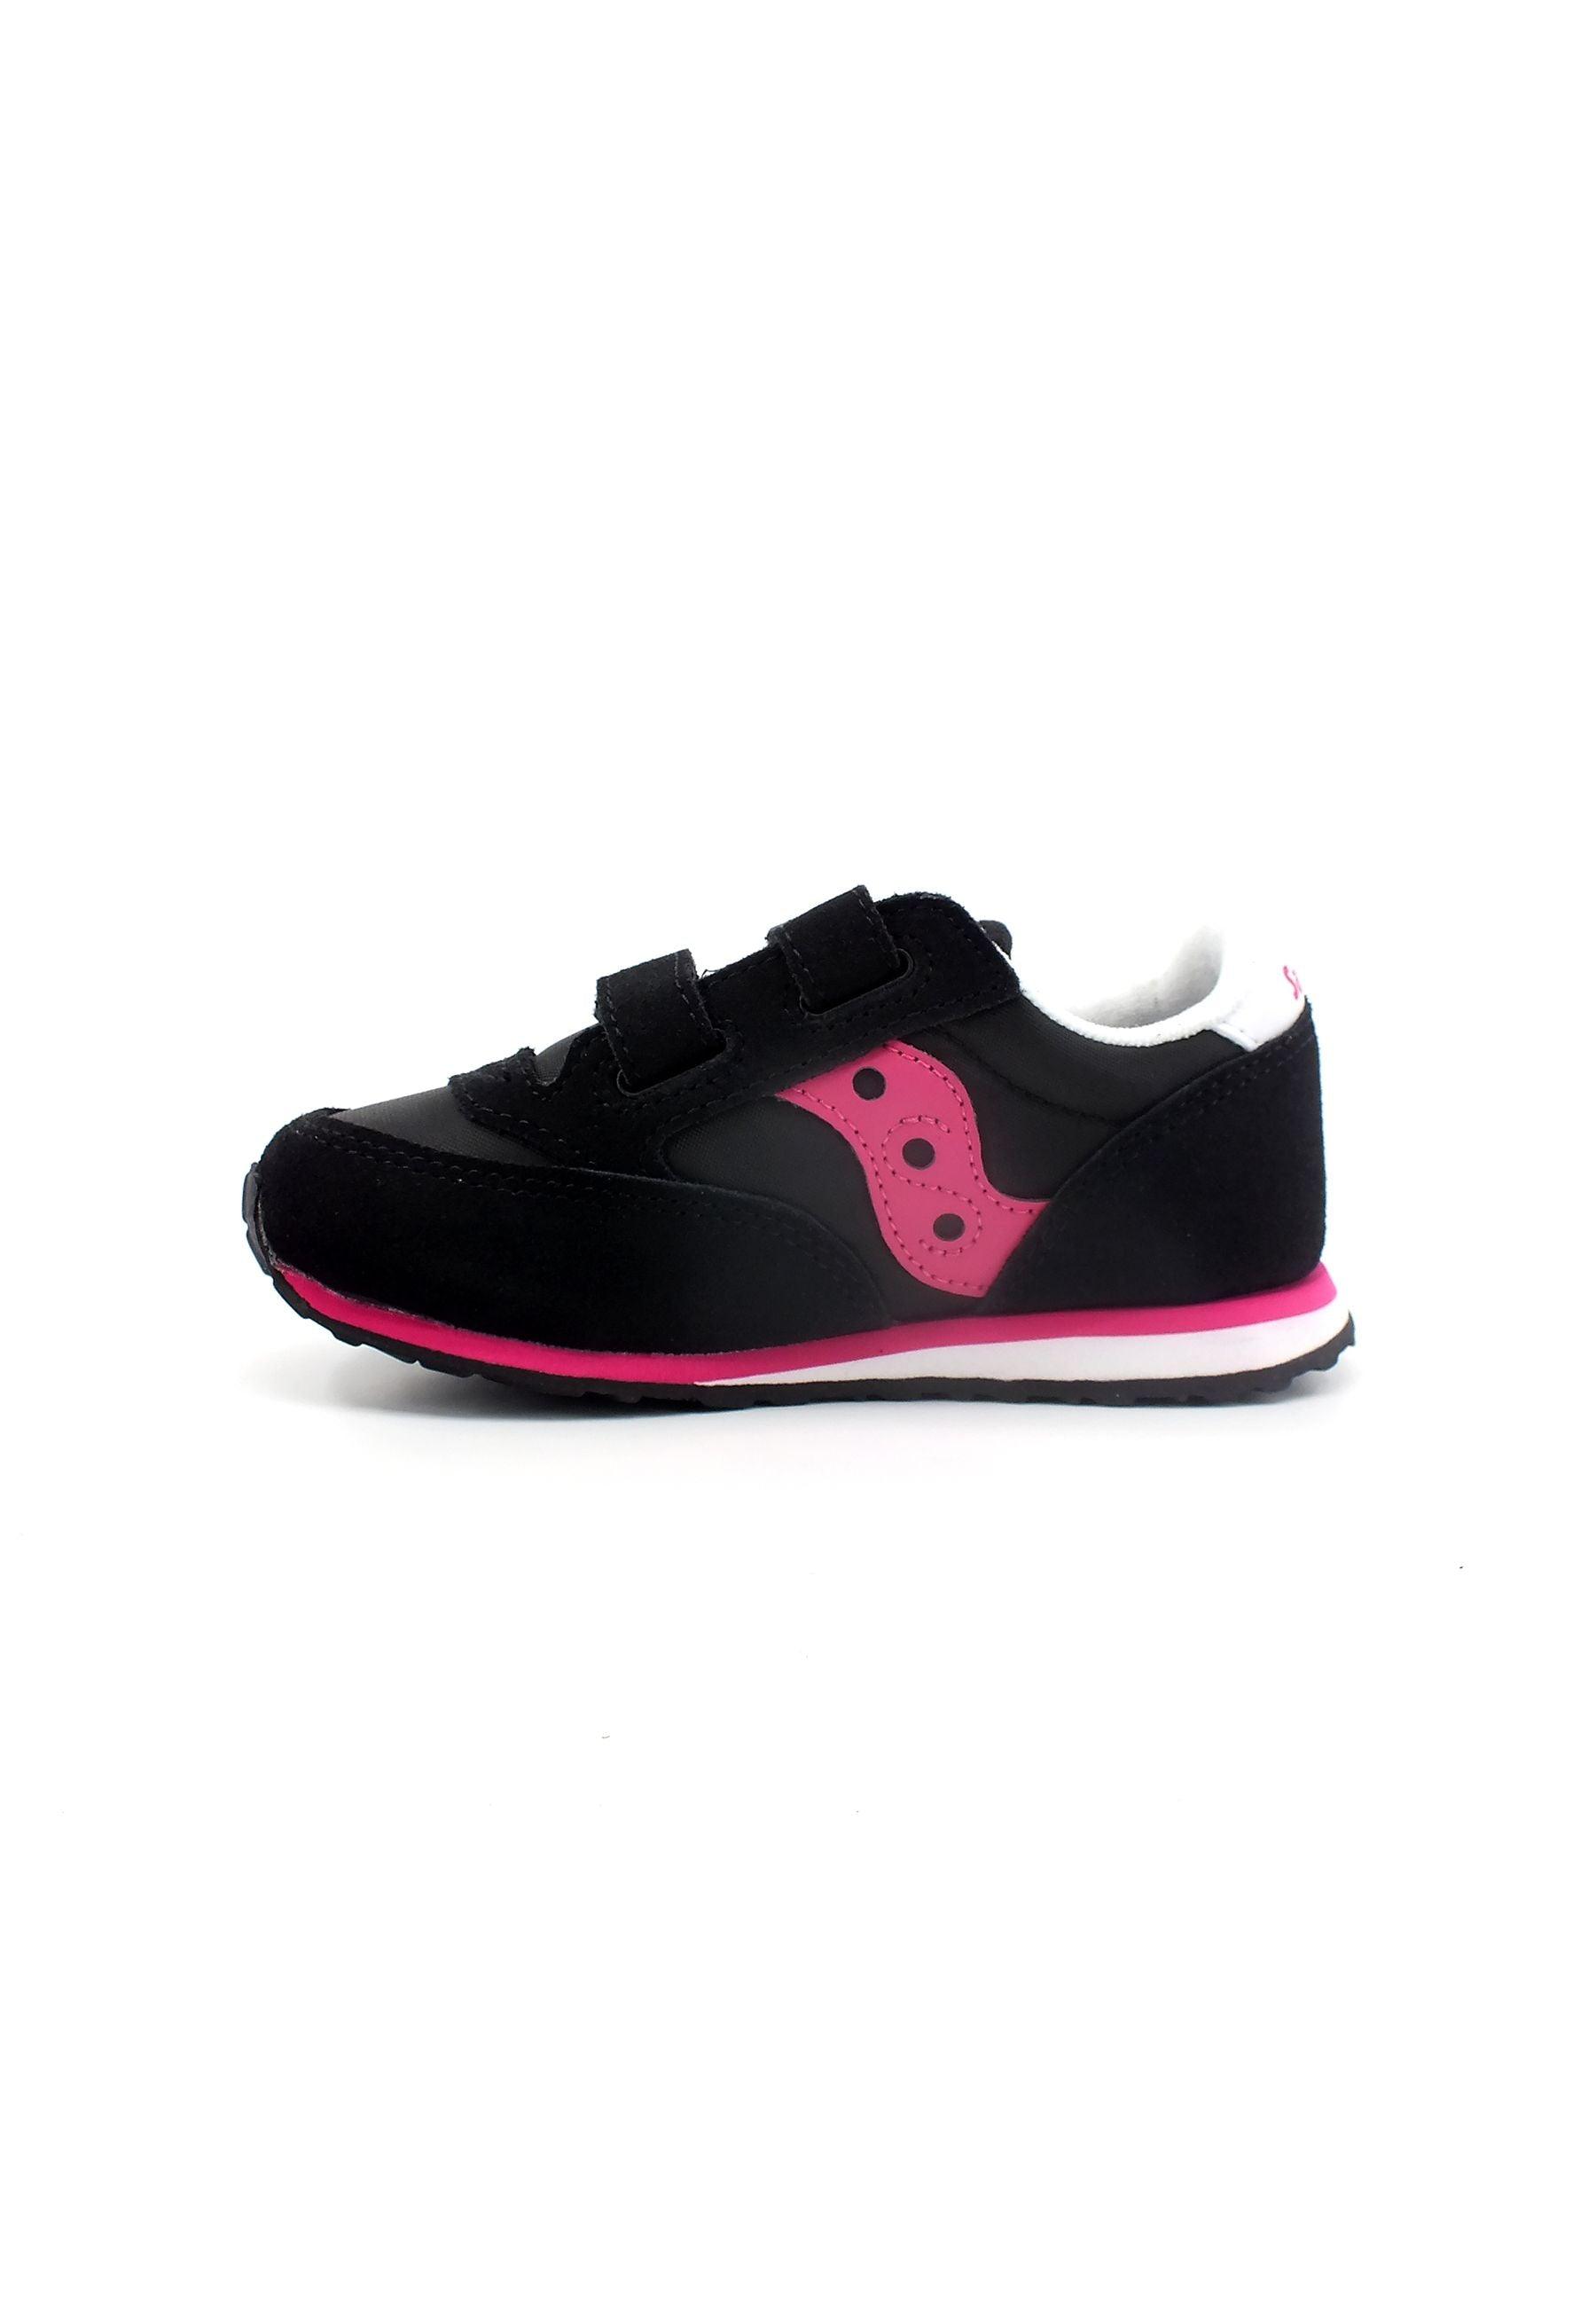 SAUCONY Baby Jazz Sneaker Bambino Black Pink SL166341 - Sandrini Calzature e Abbigliamento